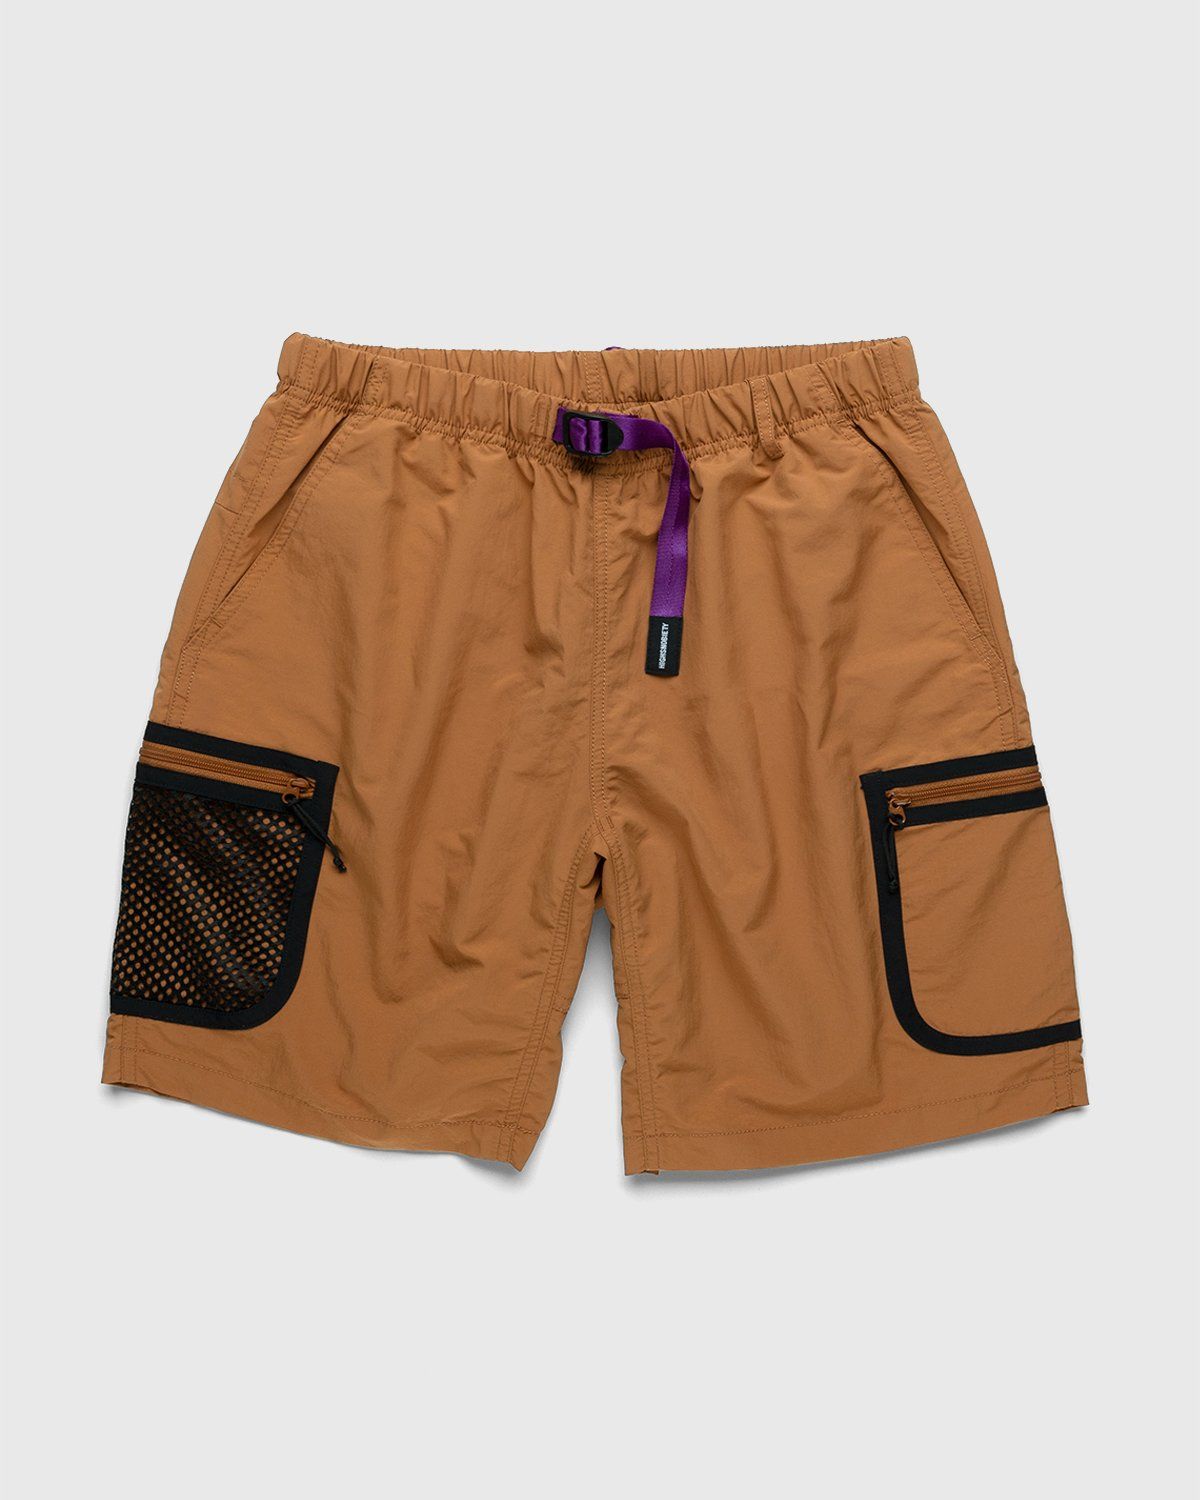 Gramicci x Highsnobiety – Shorts Rust - Shorts - Brown - Image 1